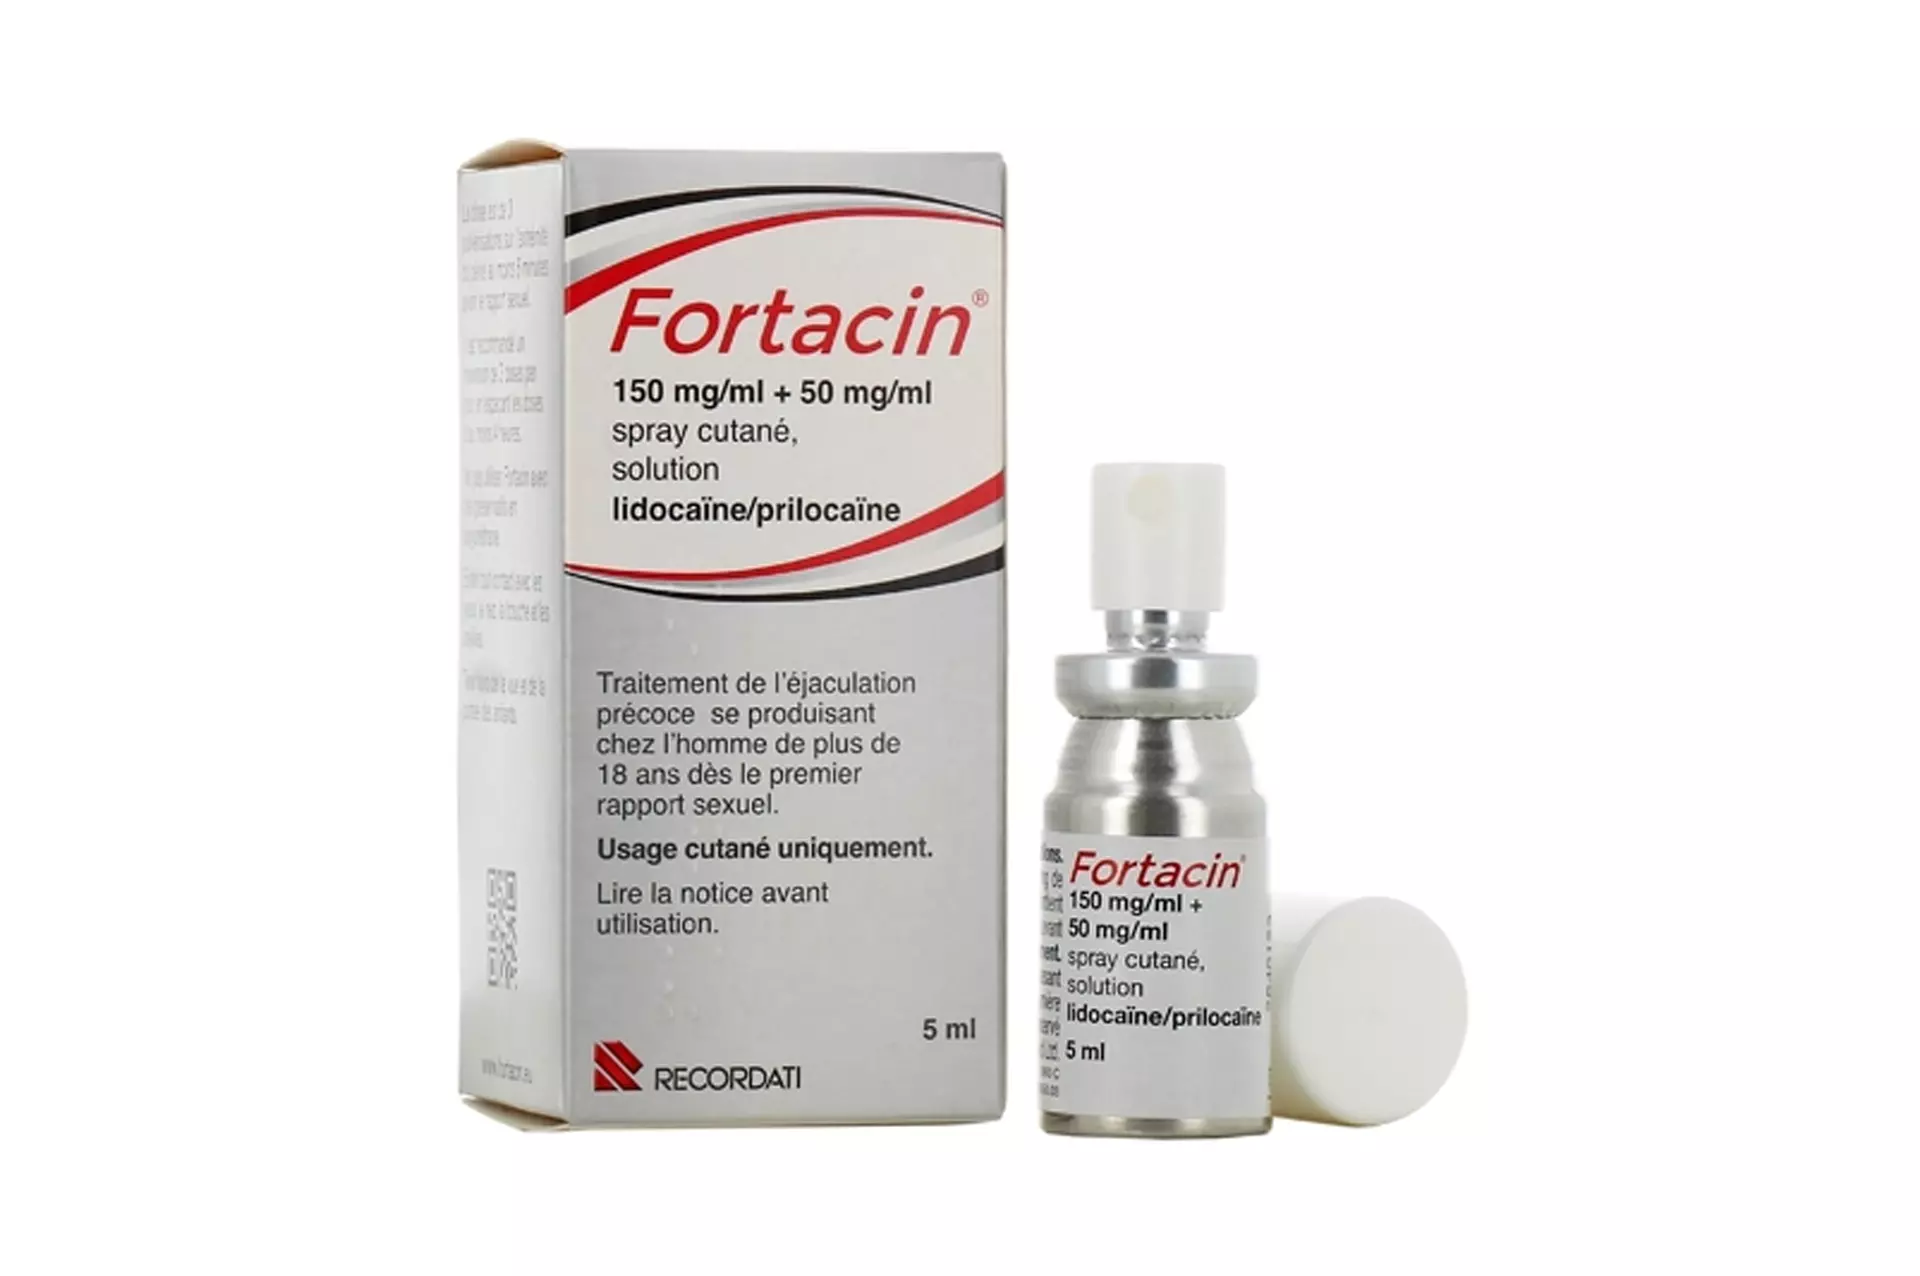 Fortacin spray sans ordonnance en pharmacie